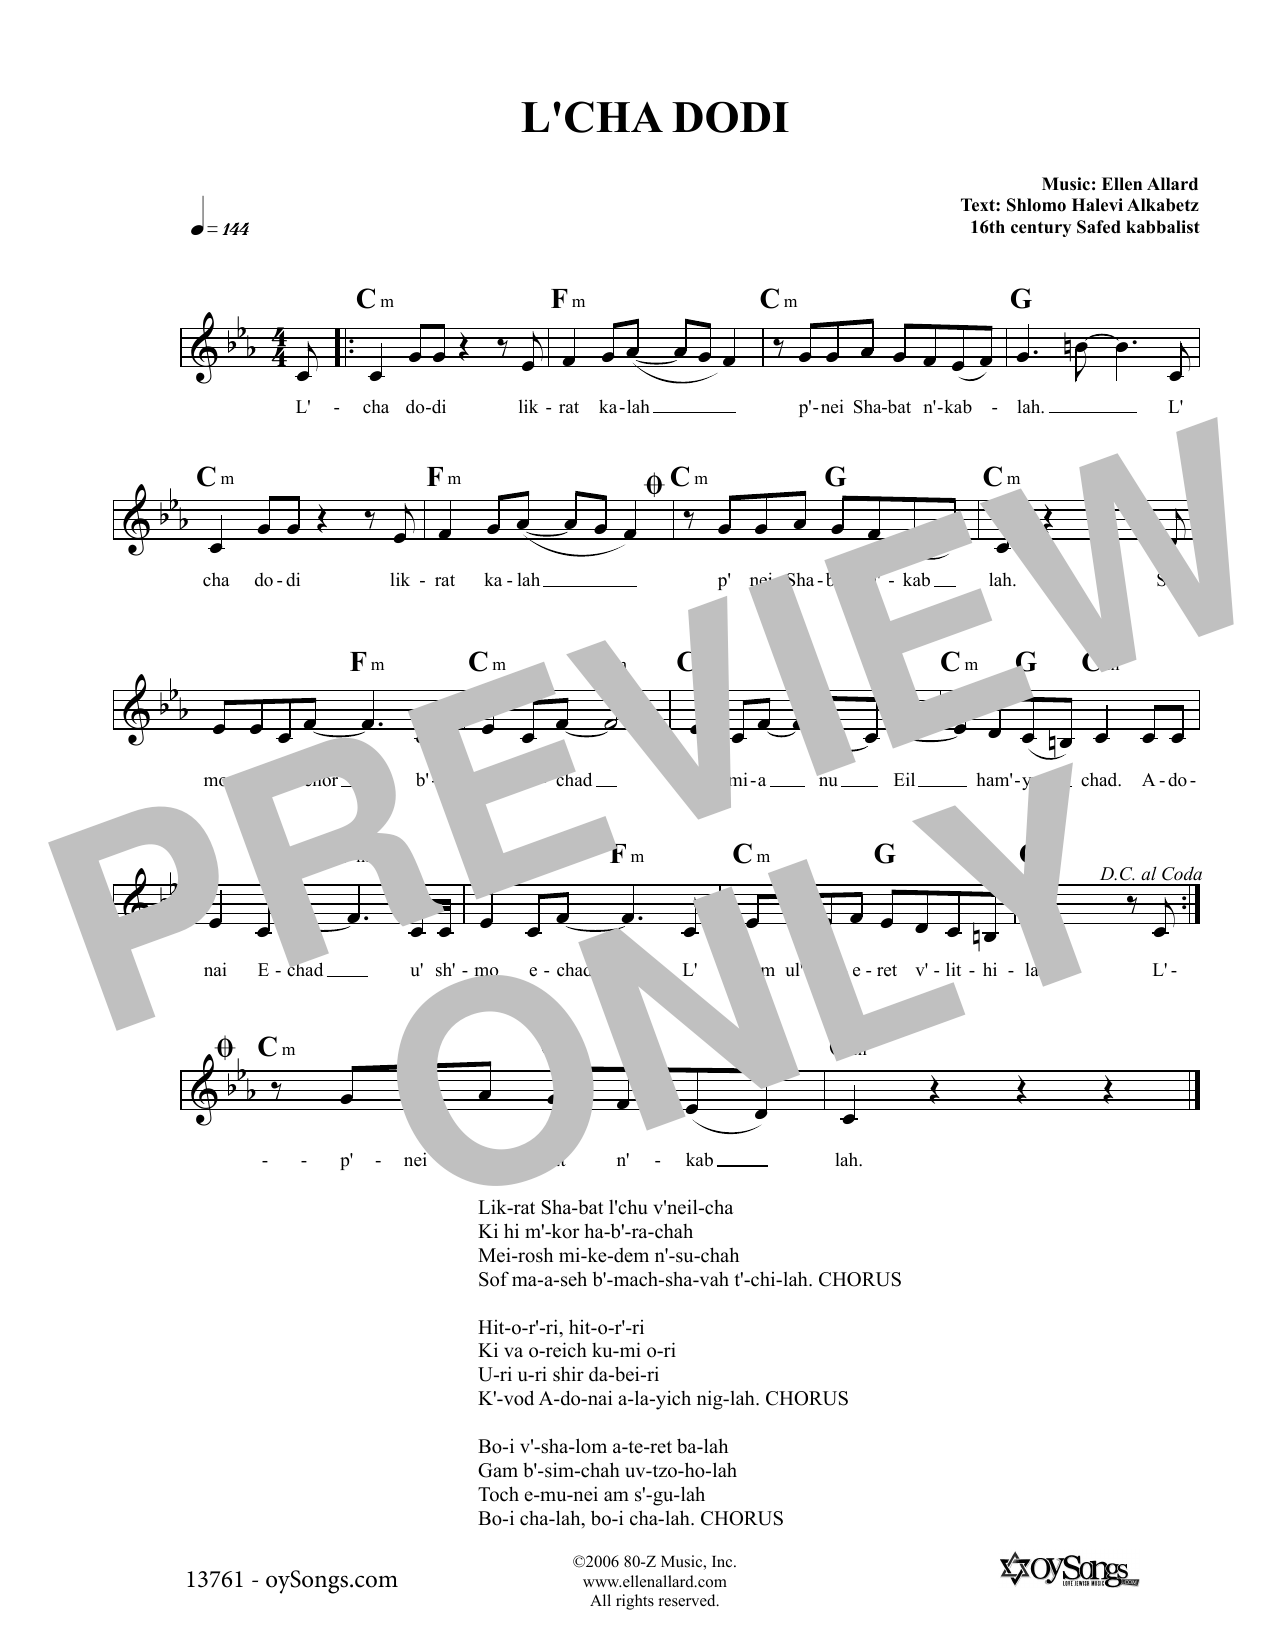 Ellen Allard L'cha Dodi sheet music notes and chords arranged for Lead Sheet / Fake Book